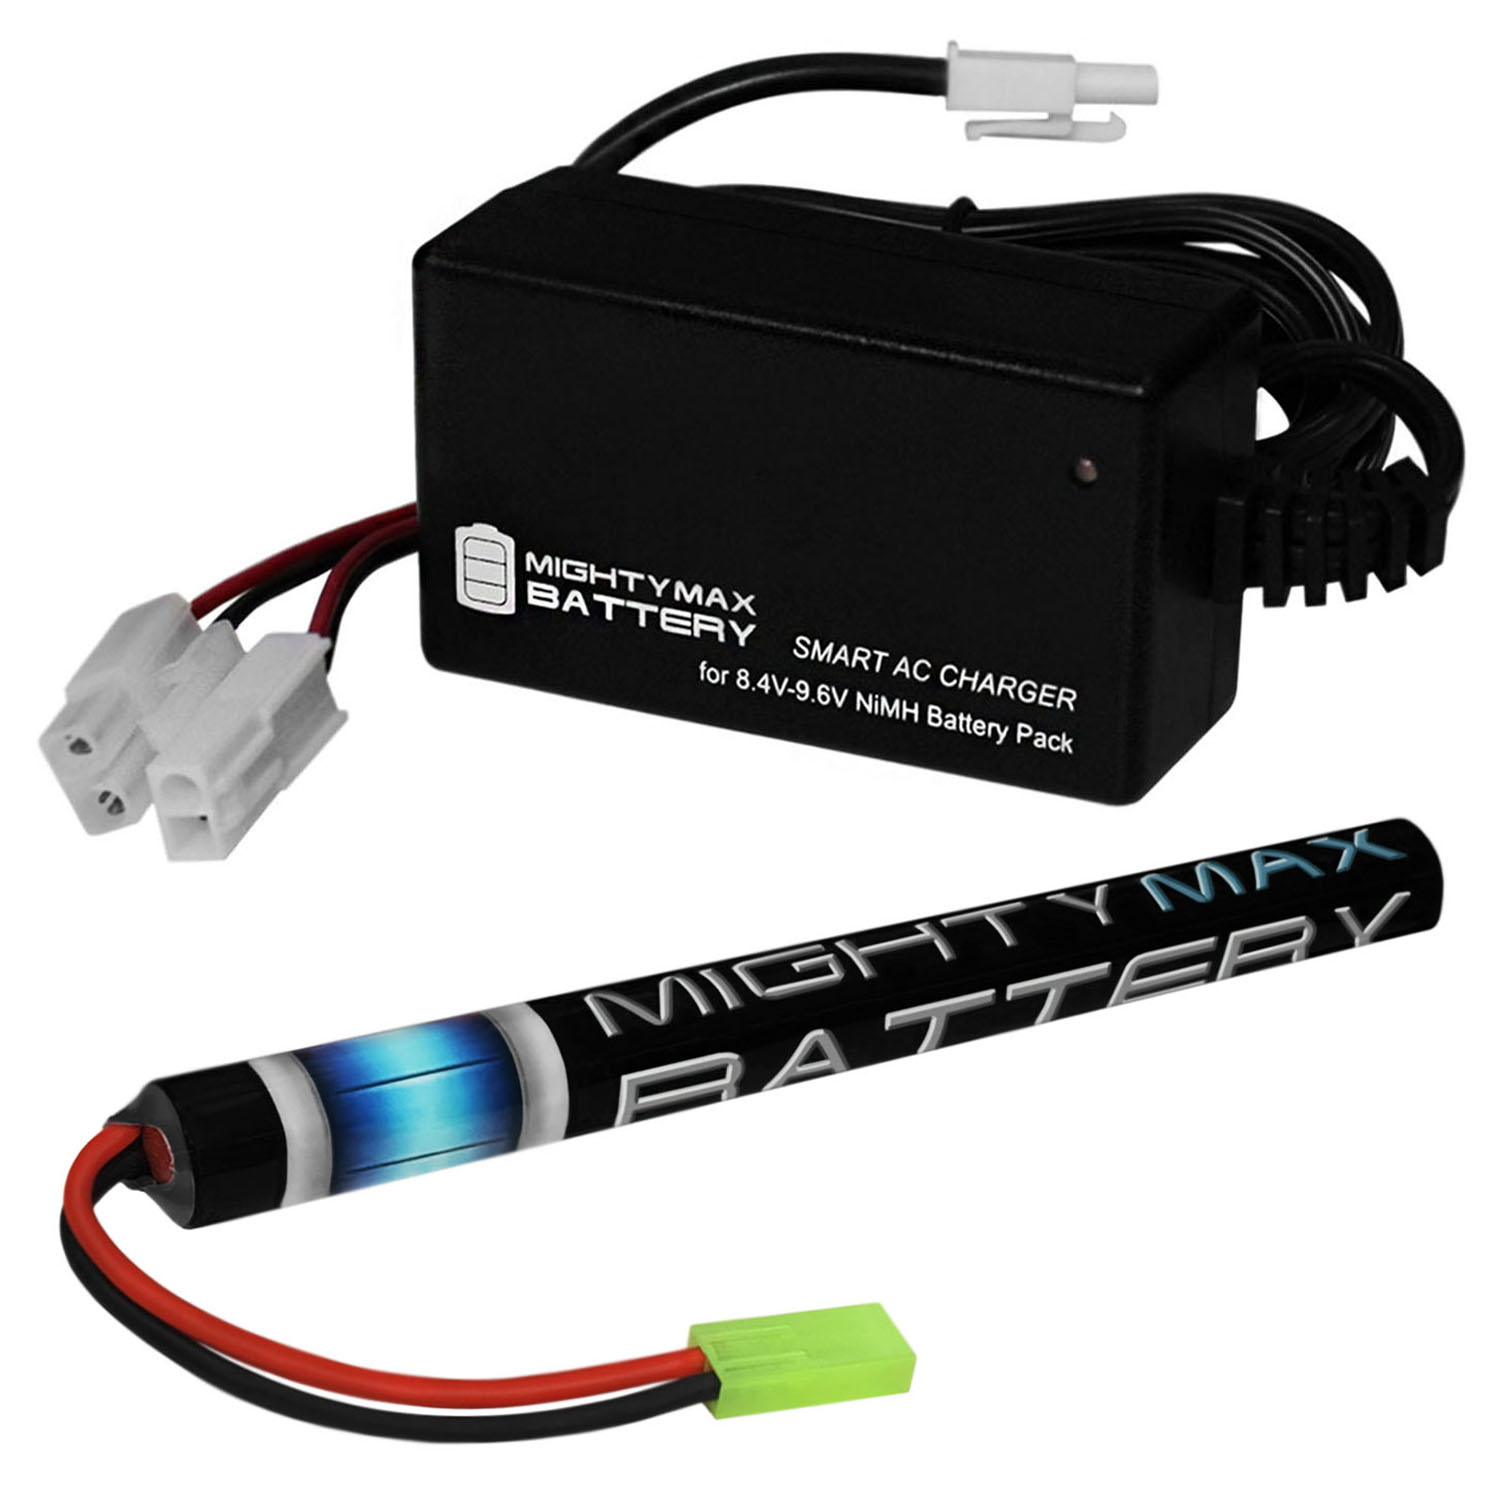 8.4V NiMH 1600mAh Stick Pack Mini Battery + 8.4V-9.6V NiMH Smart Charger